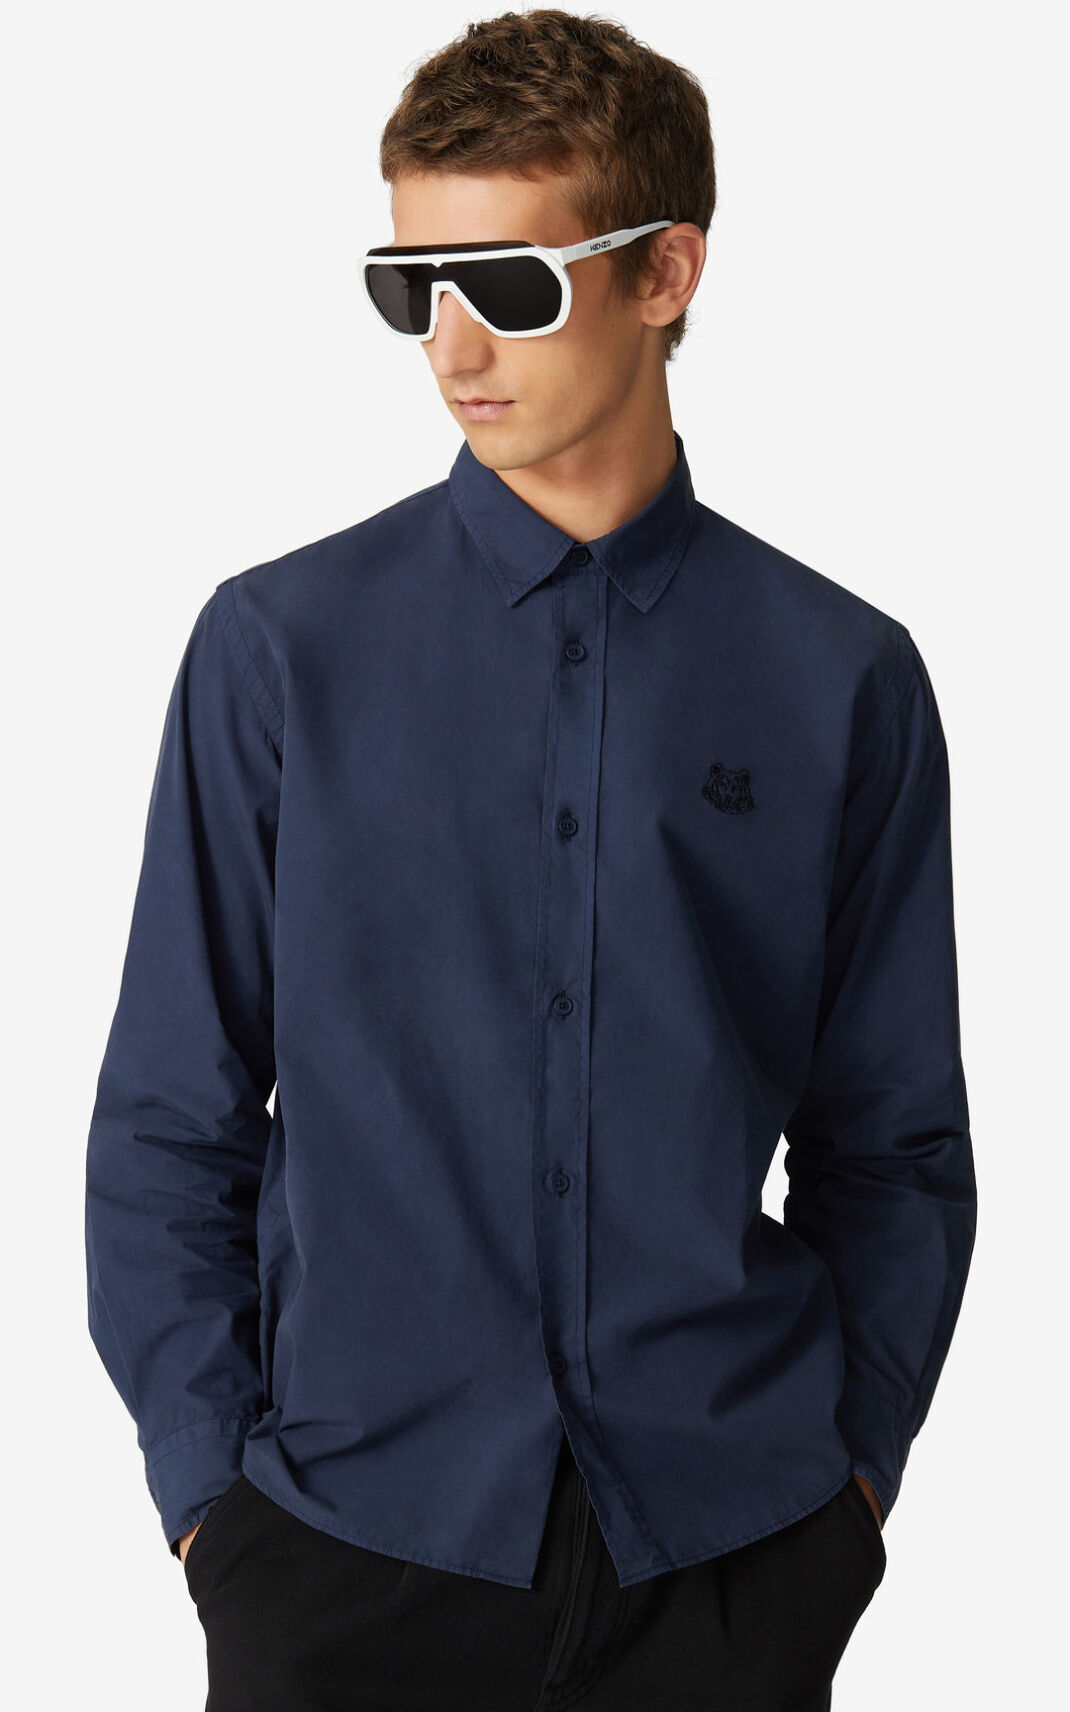 Kenzo Tiger Crest casual Shirt Navy Blue For Mens 4302RPBLW